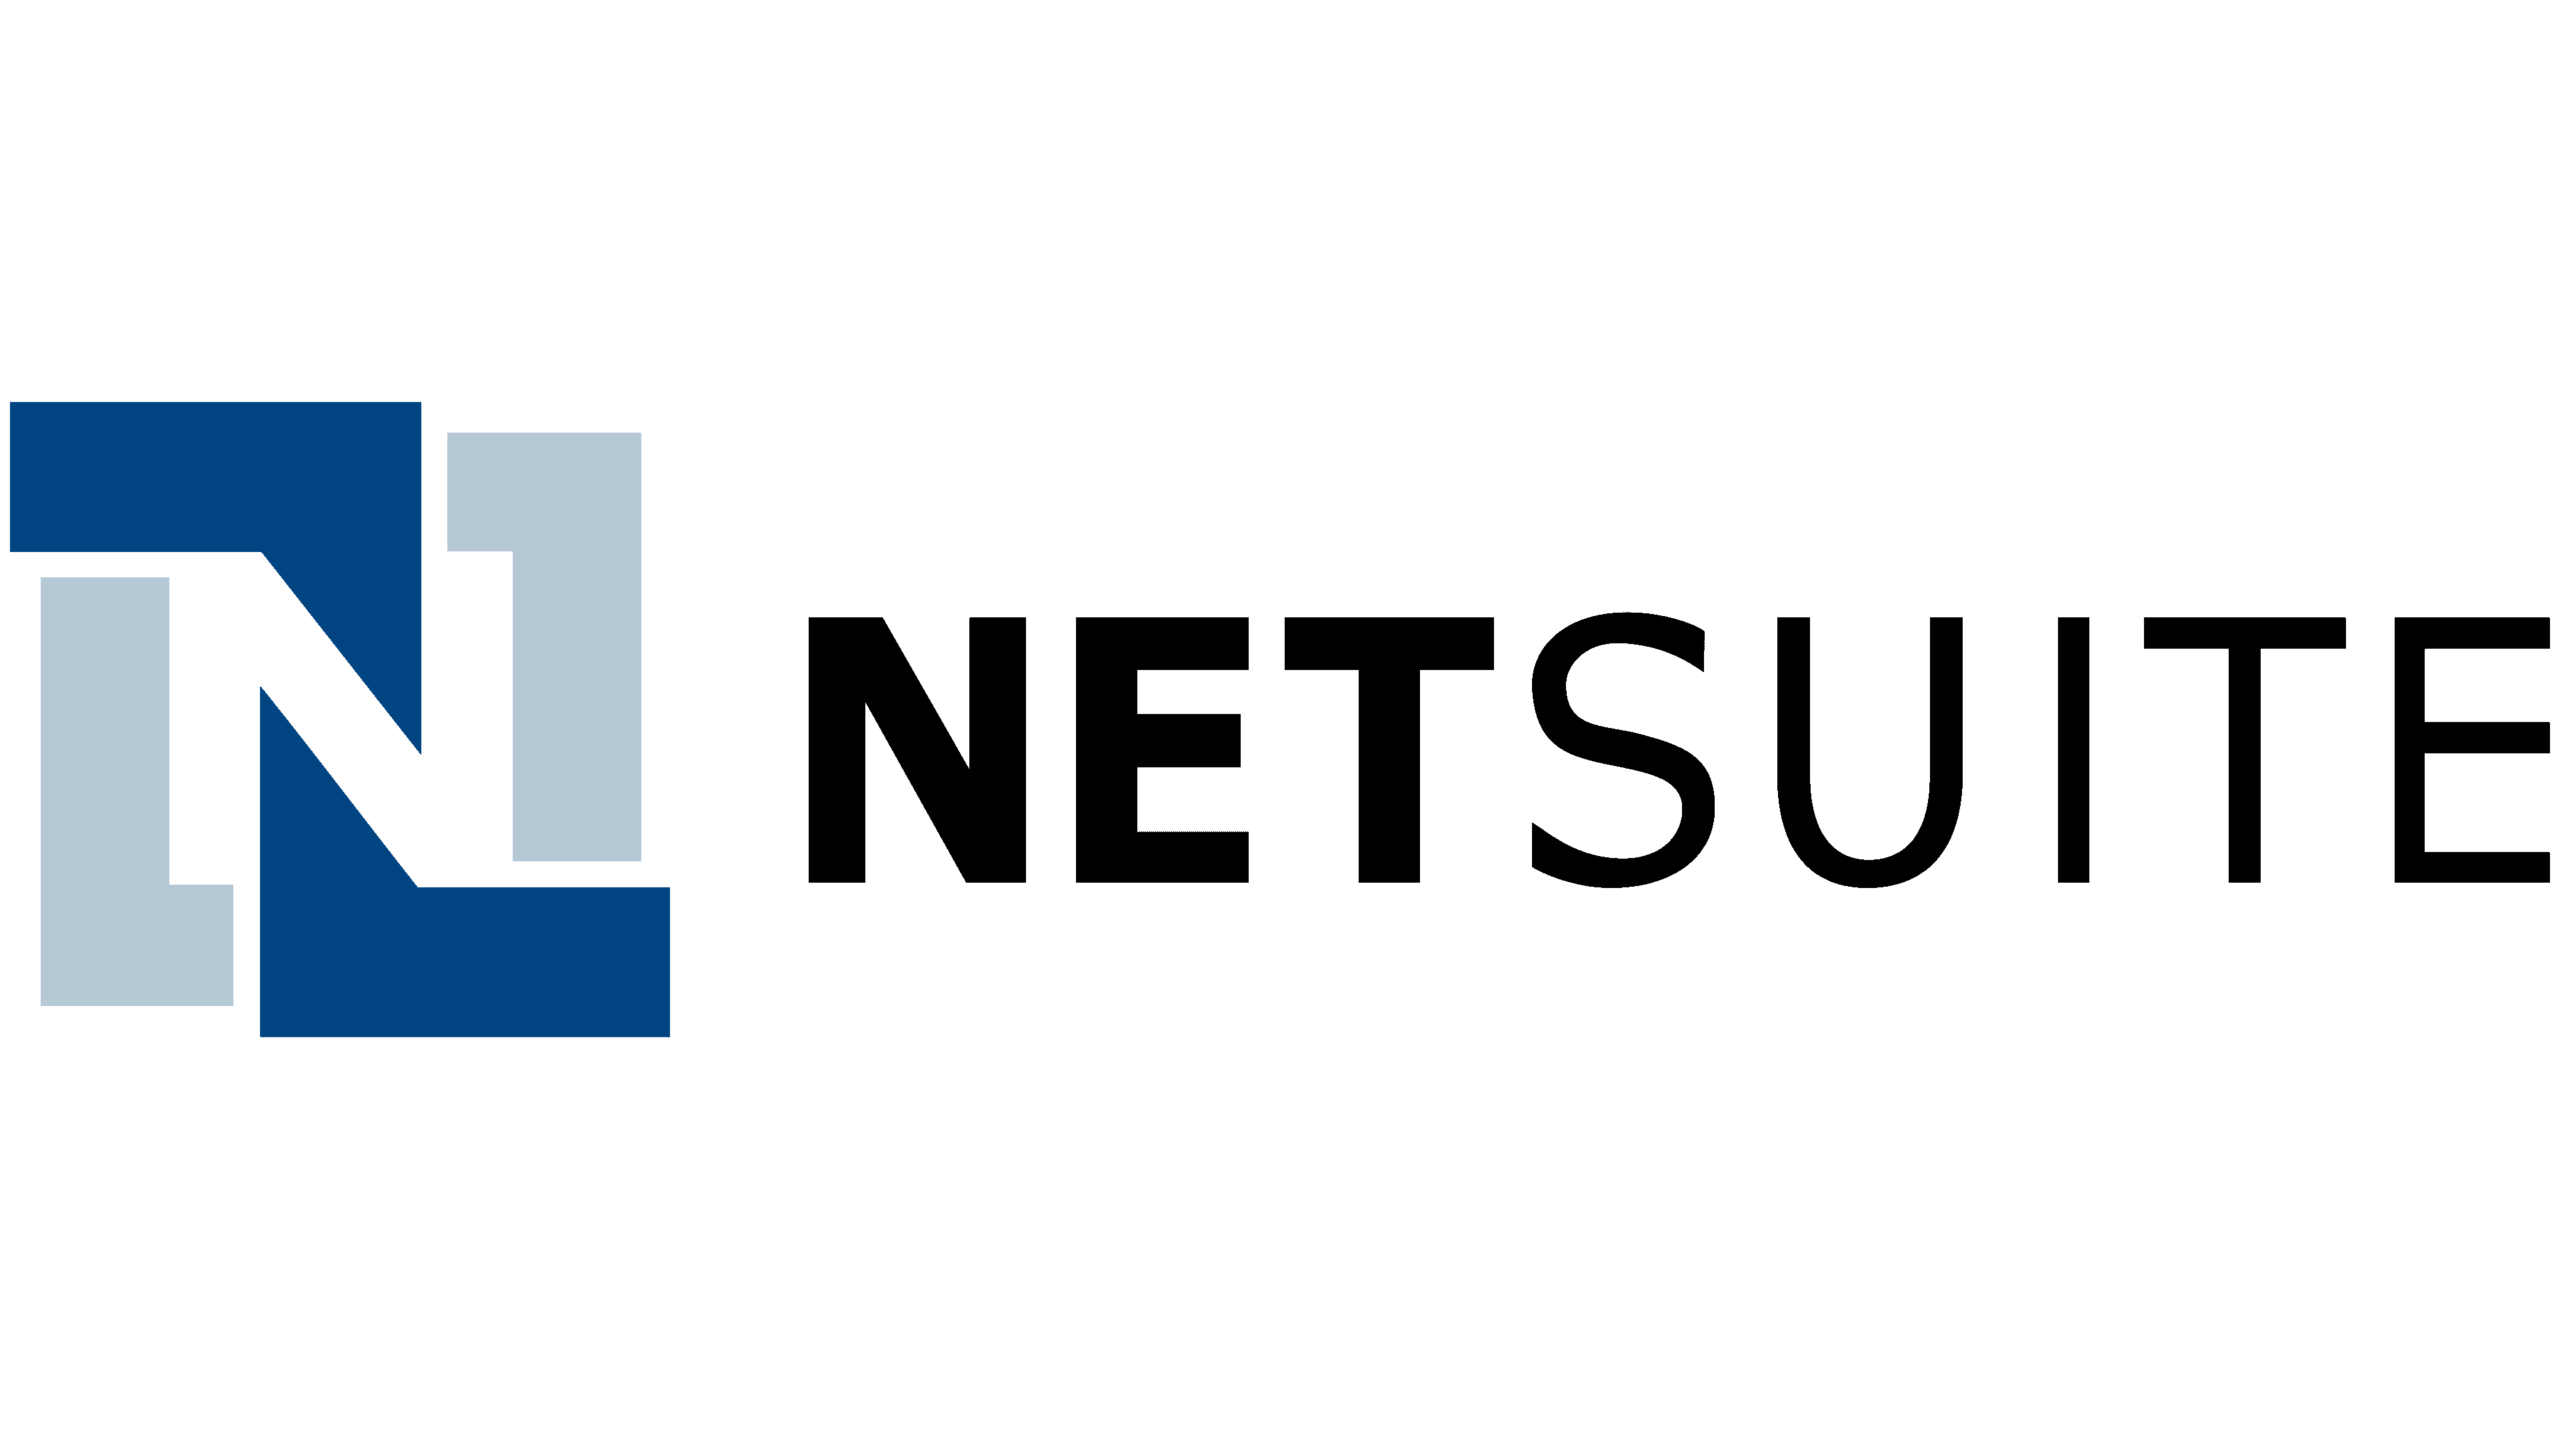 Logo NetSuite